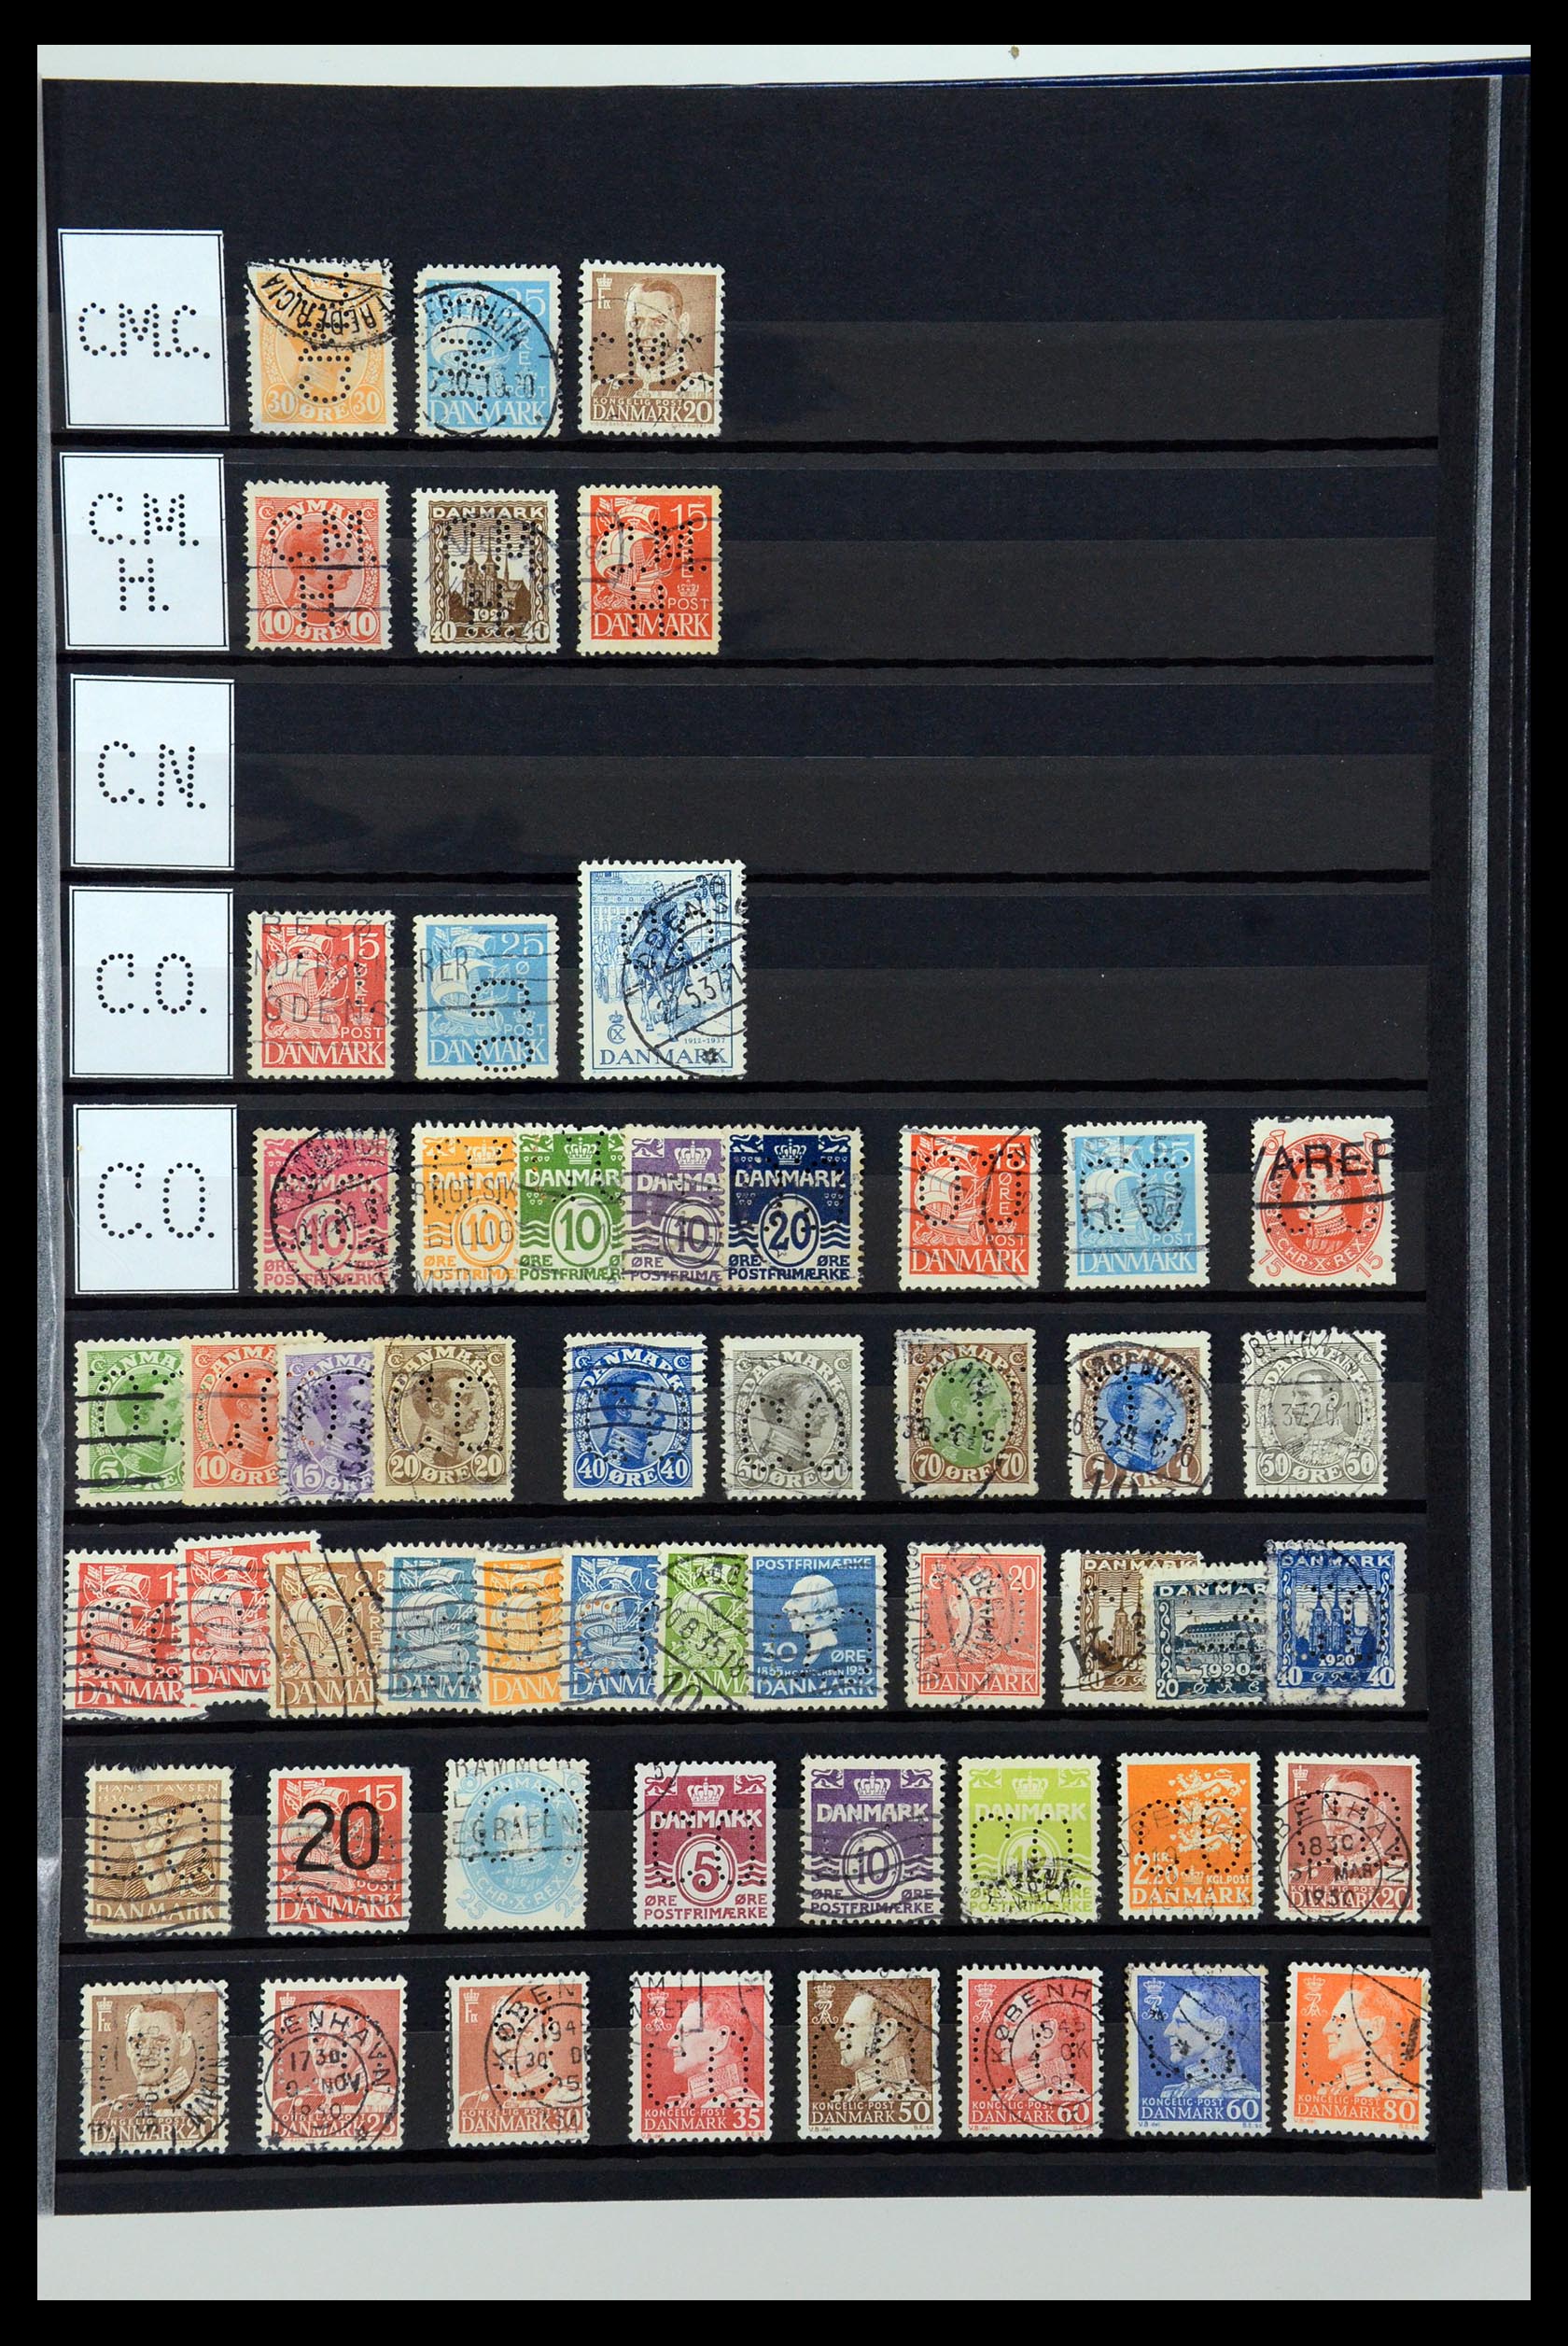 36396 029 - Stamp collection 36396 Denmark perfins.